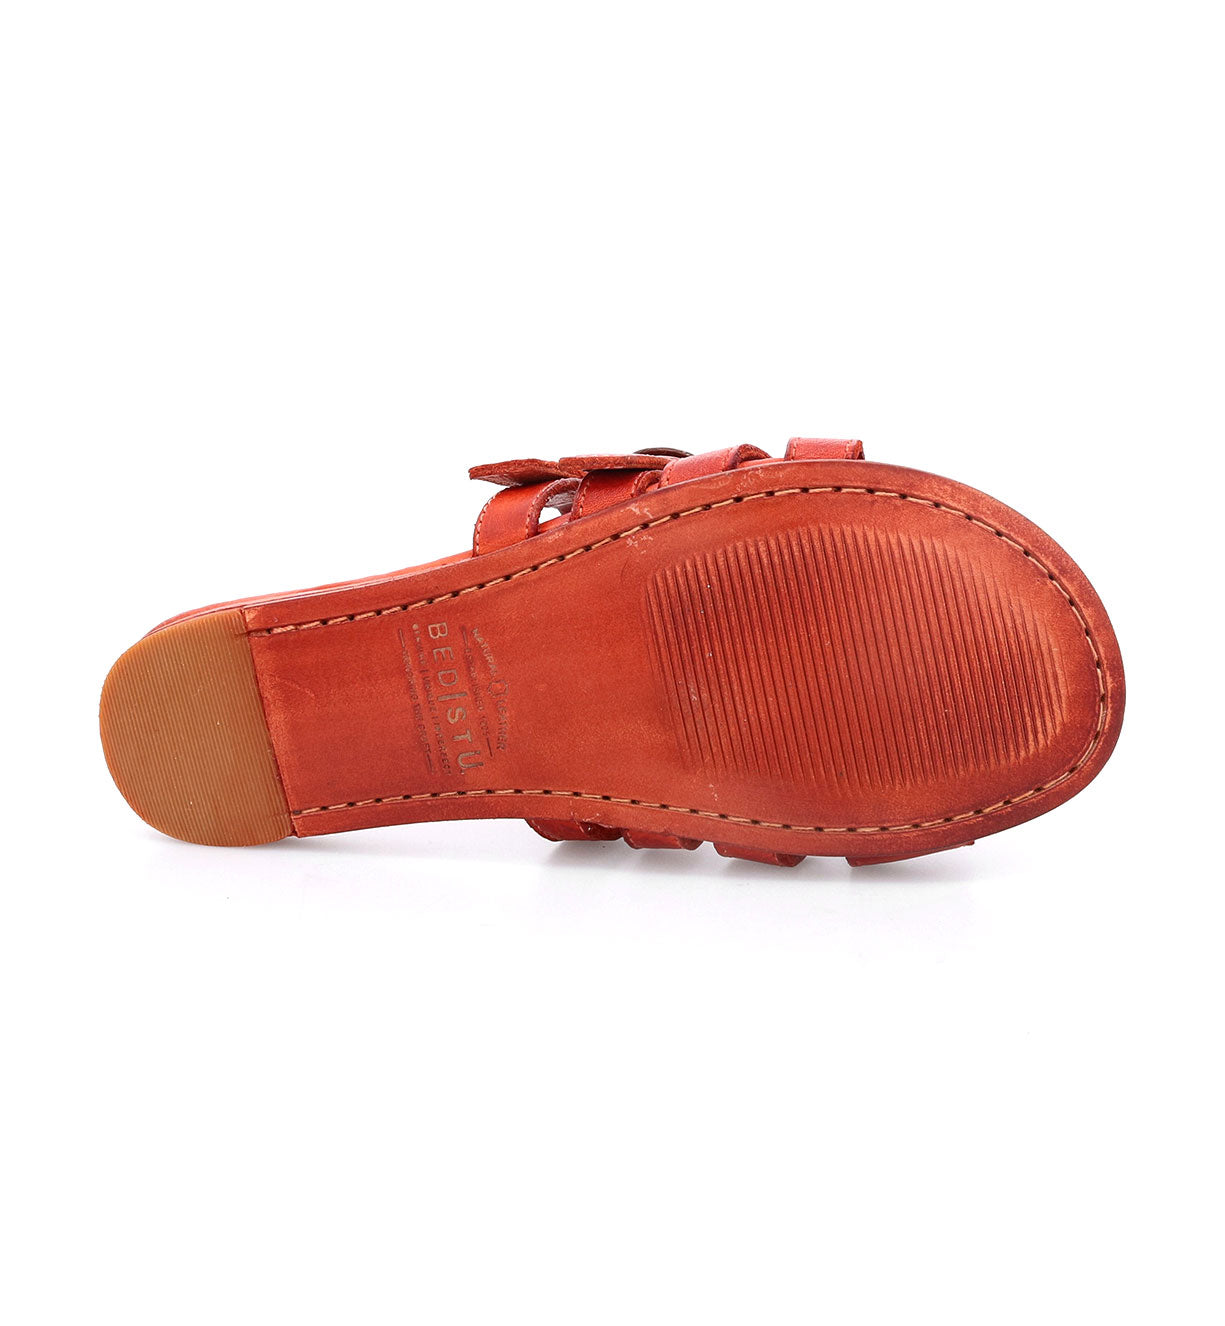 Sole of Hilda women's orange leather sandals by Bed Stu.